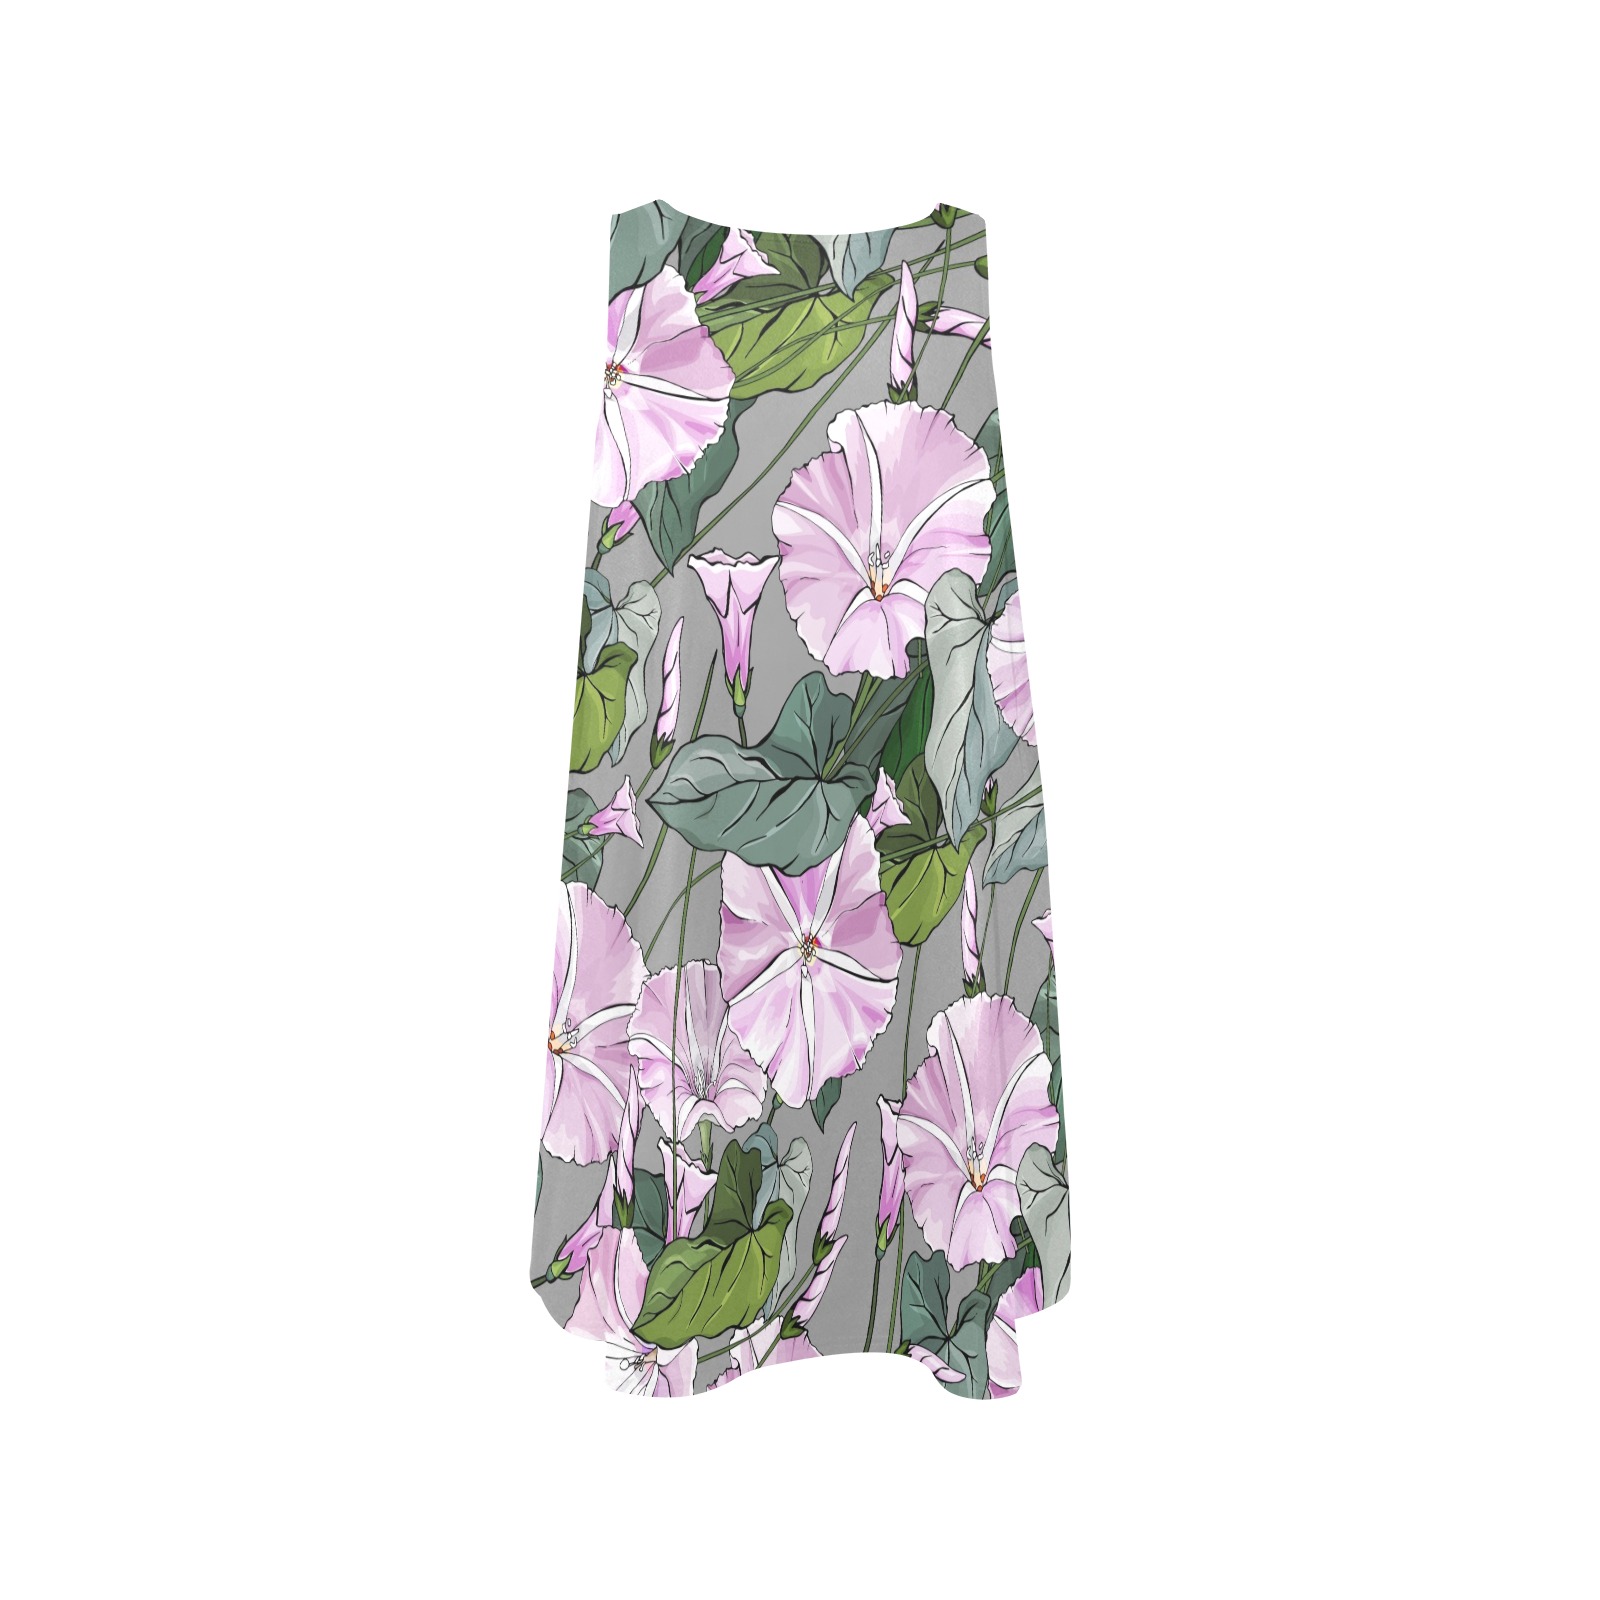 Wildflowers on Gray Background Sleeveless A-Line Pocket Dress (Model D57)